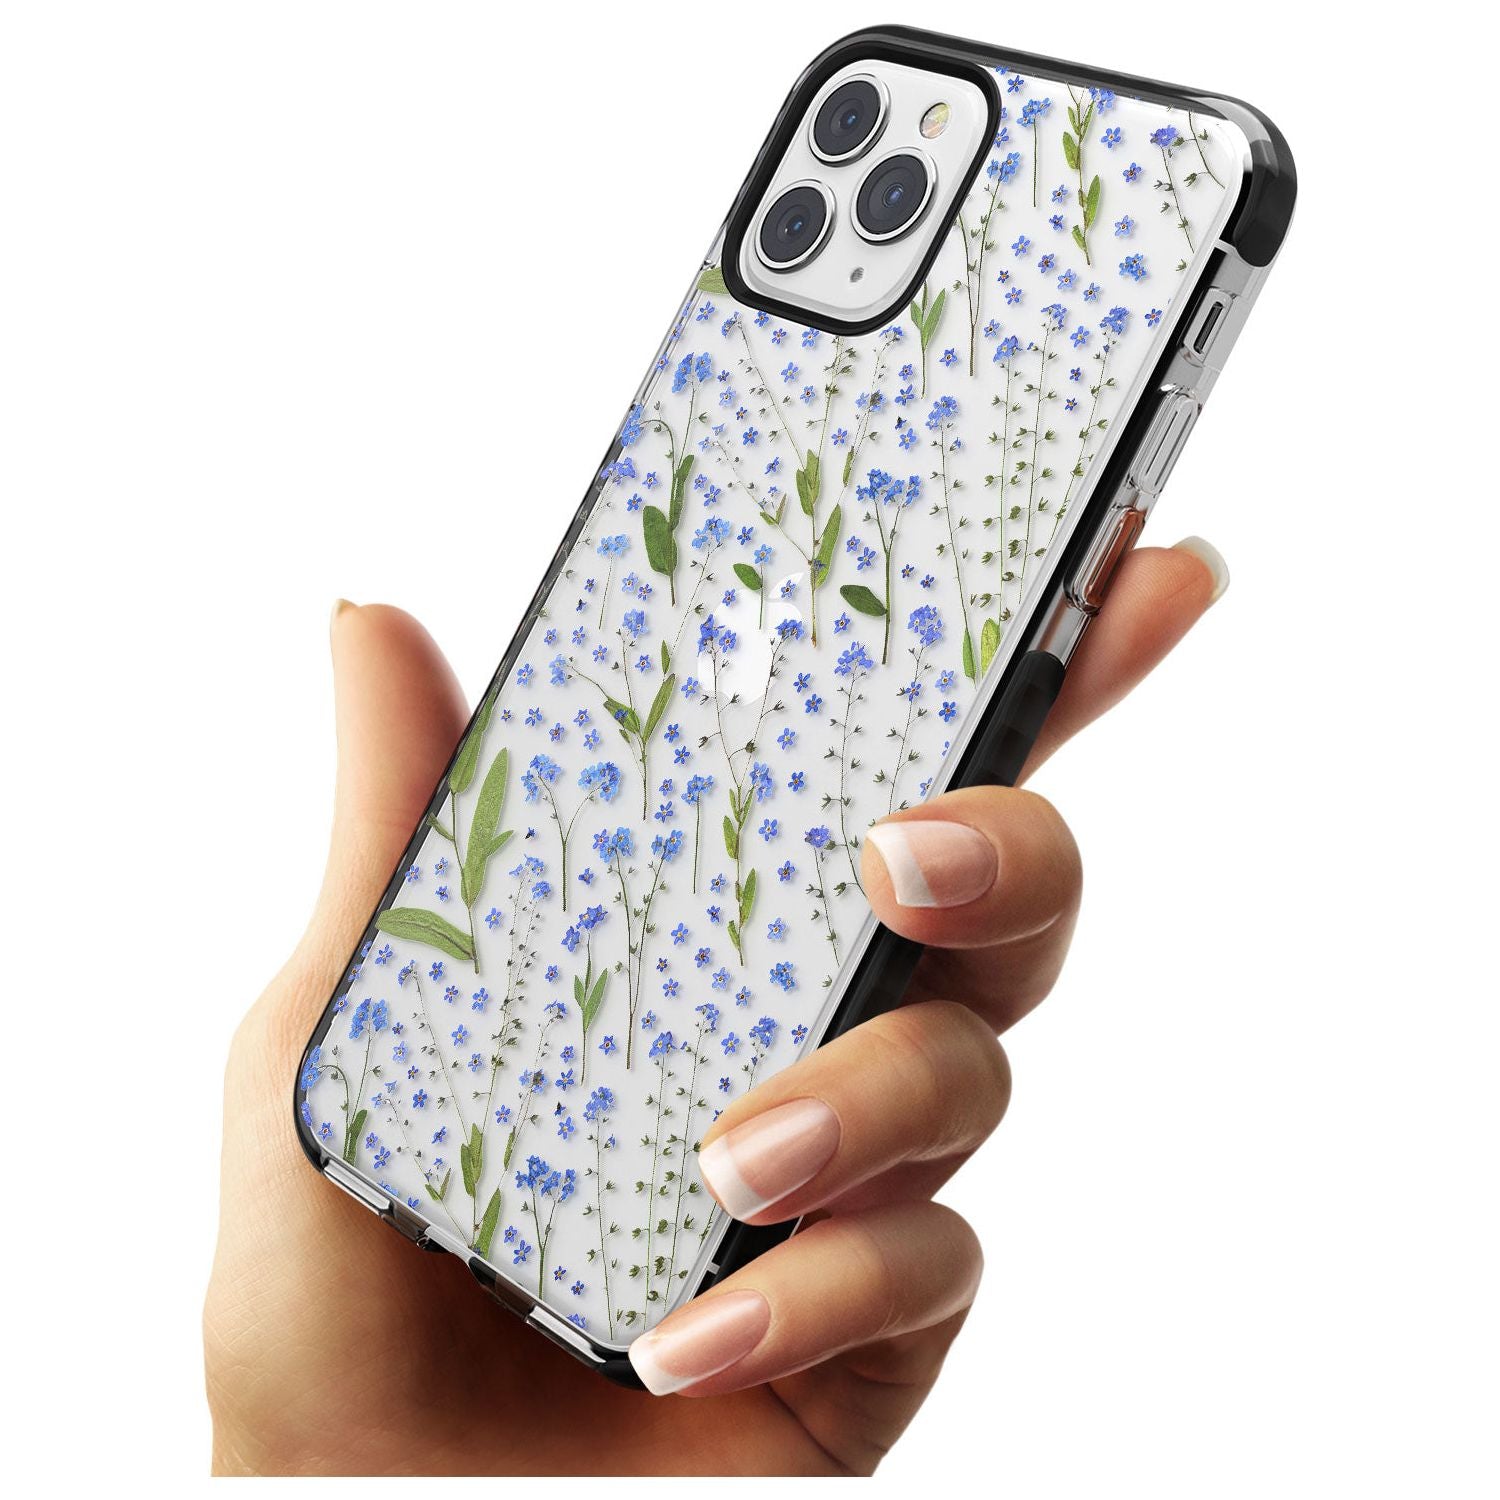 Blue Wild Flower Design Black Impact Phone Case for iPhone 11 Pro Max